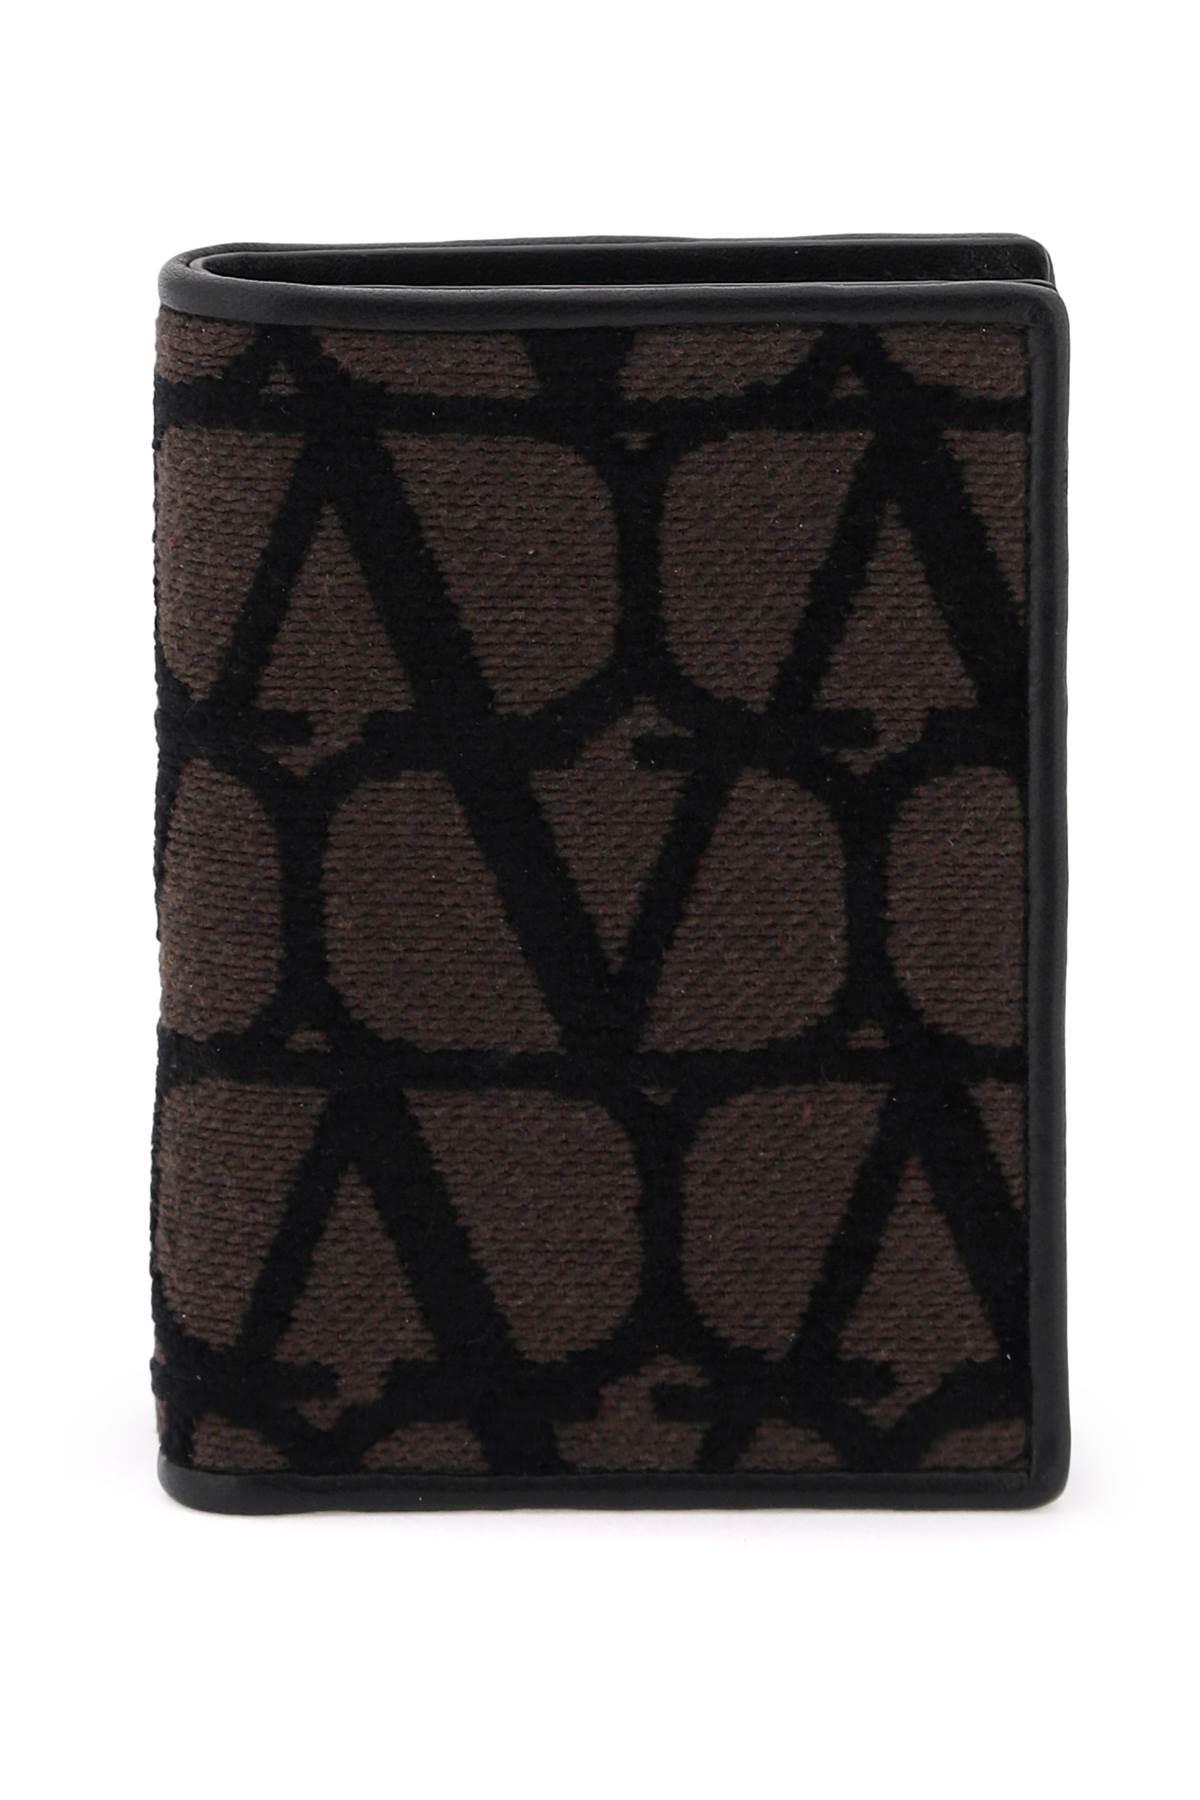 Louis Vuitton Monogram Print Leather Bi Fold Wallet on SALE